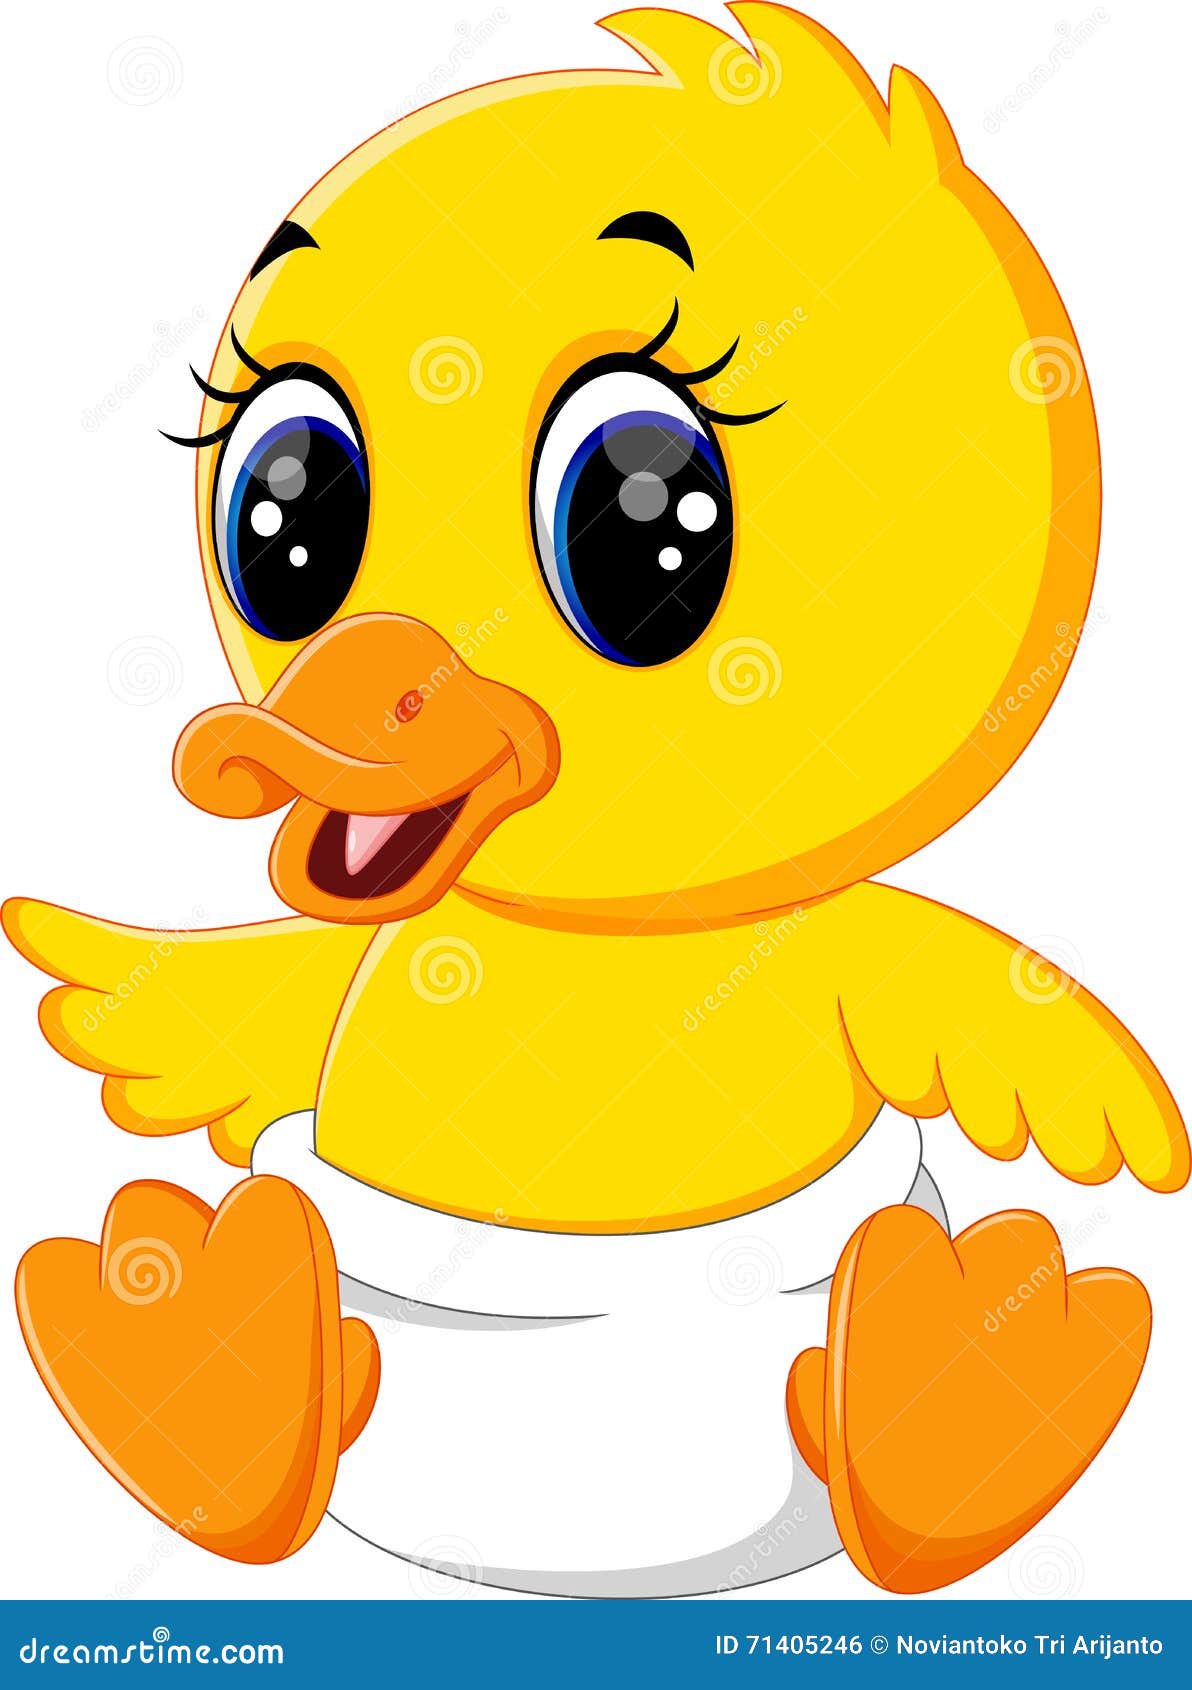 Cute baby duck cartoon stock vector. Illustration of baby - 71405246